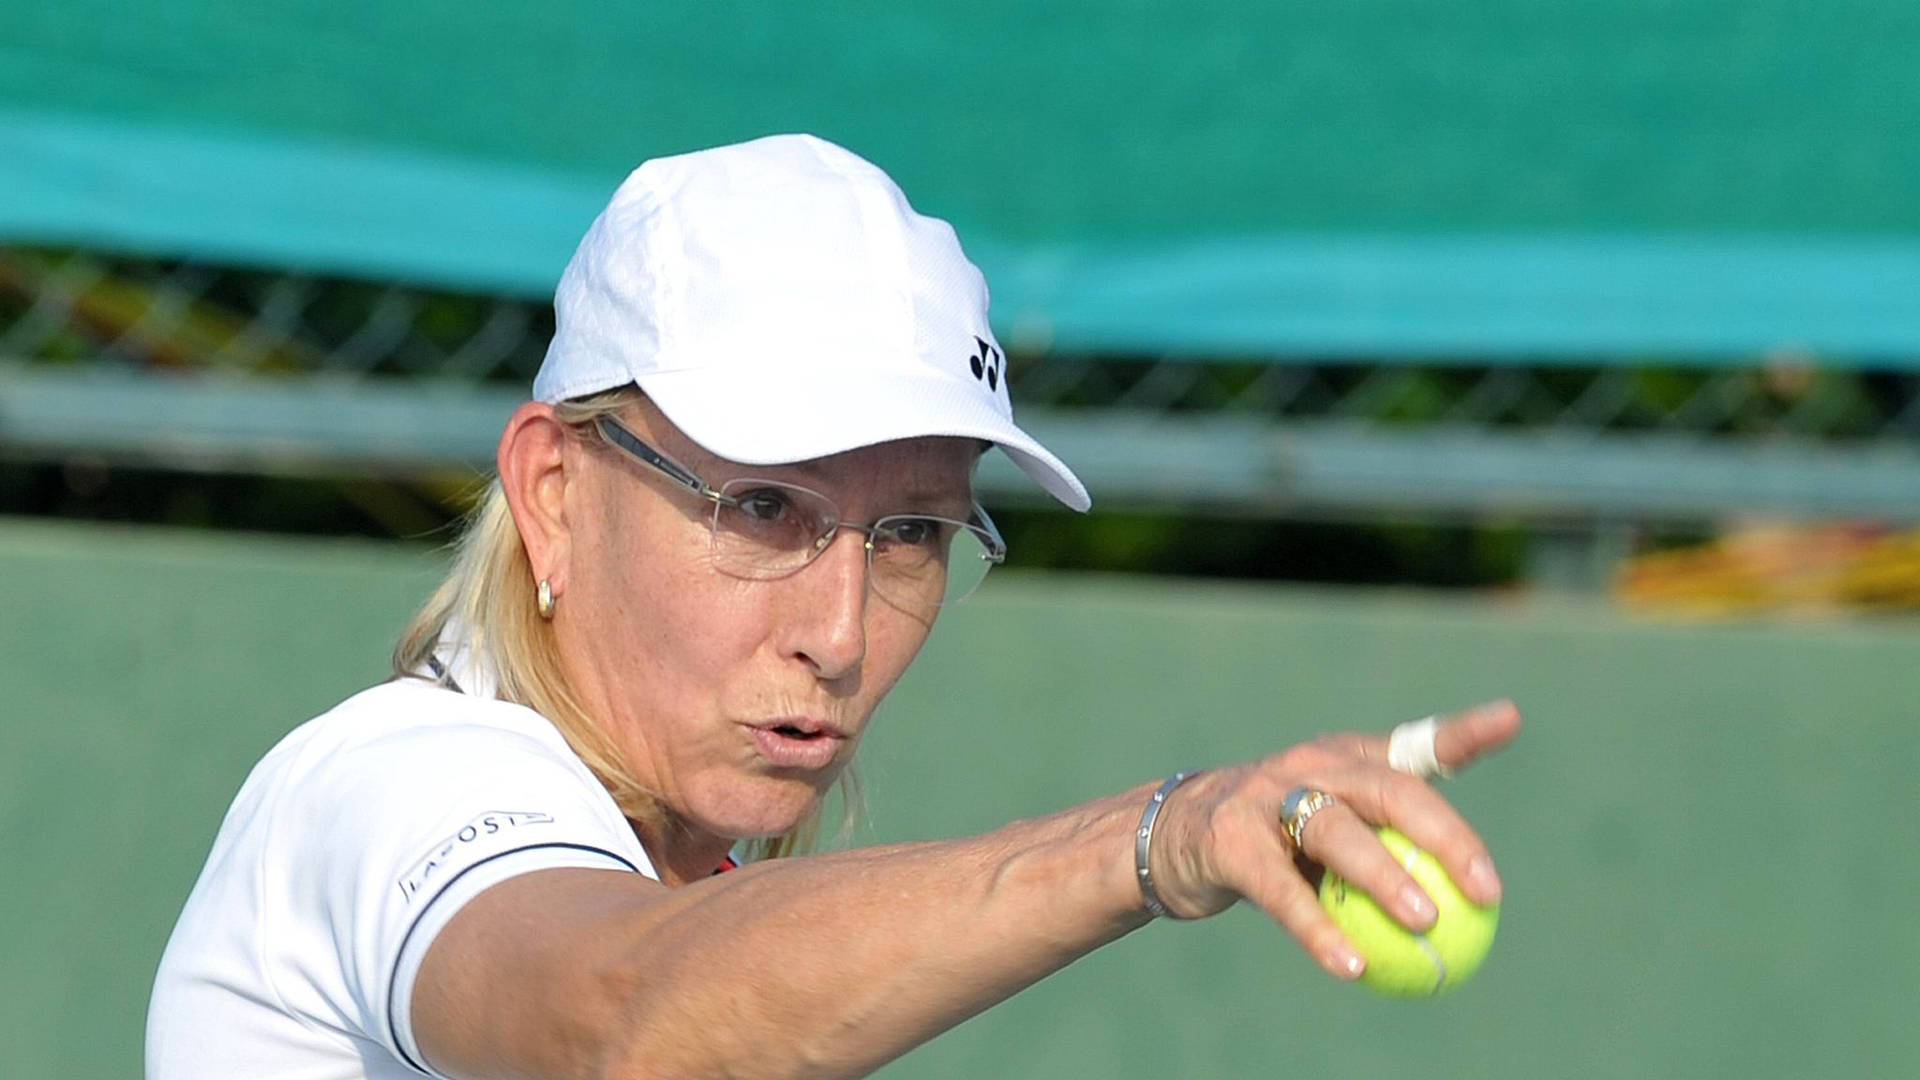 Martina Navratilova - A Tennis Legend in Action Wallpaper